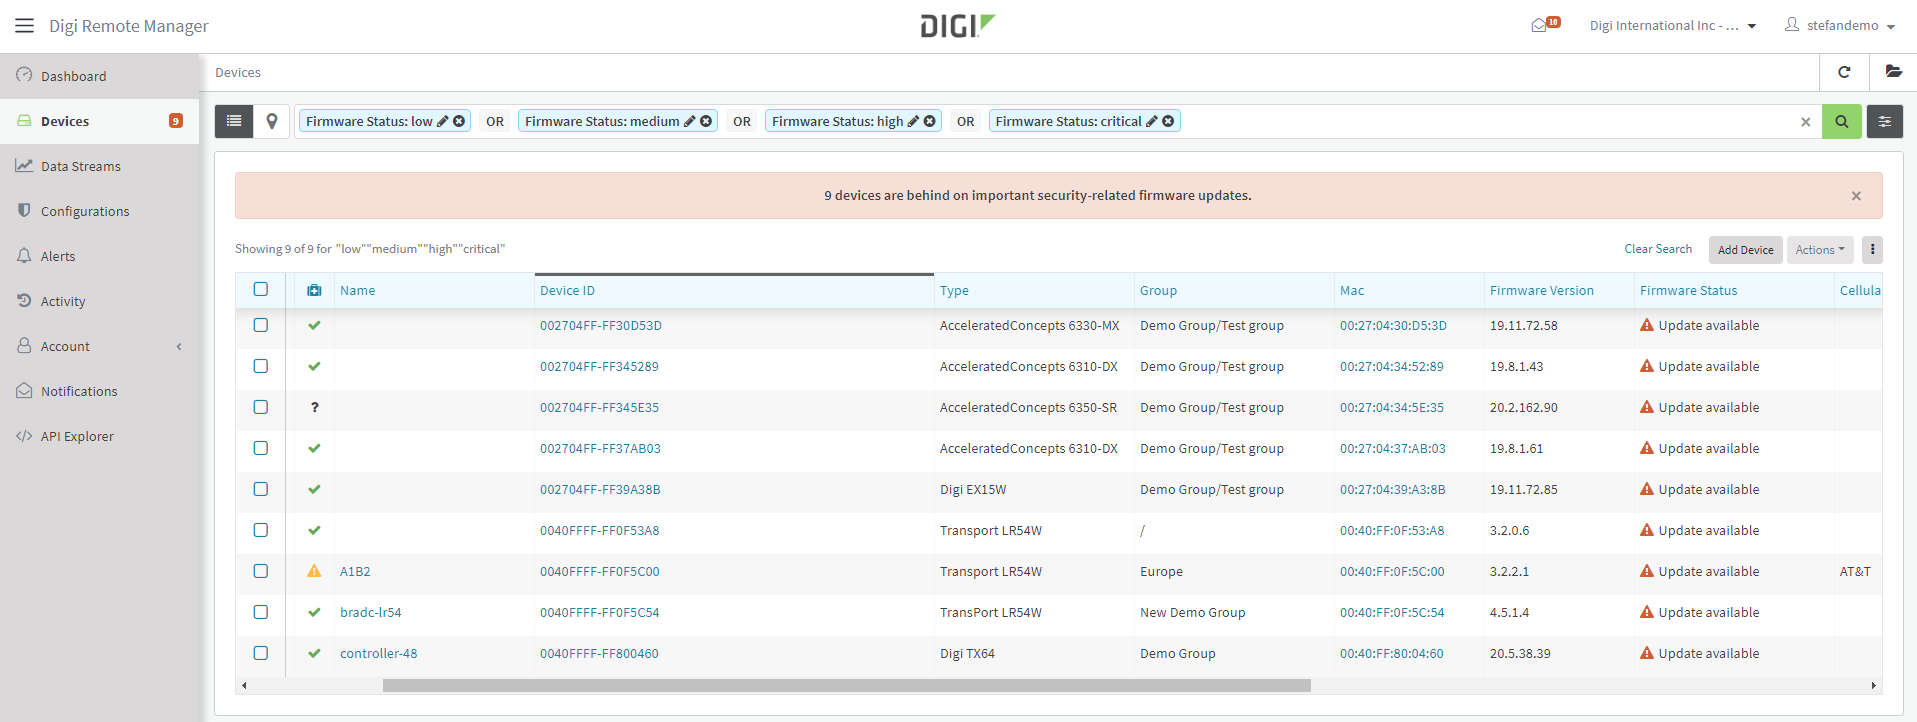 Digi Remote Manager - Firmware Status